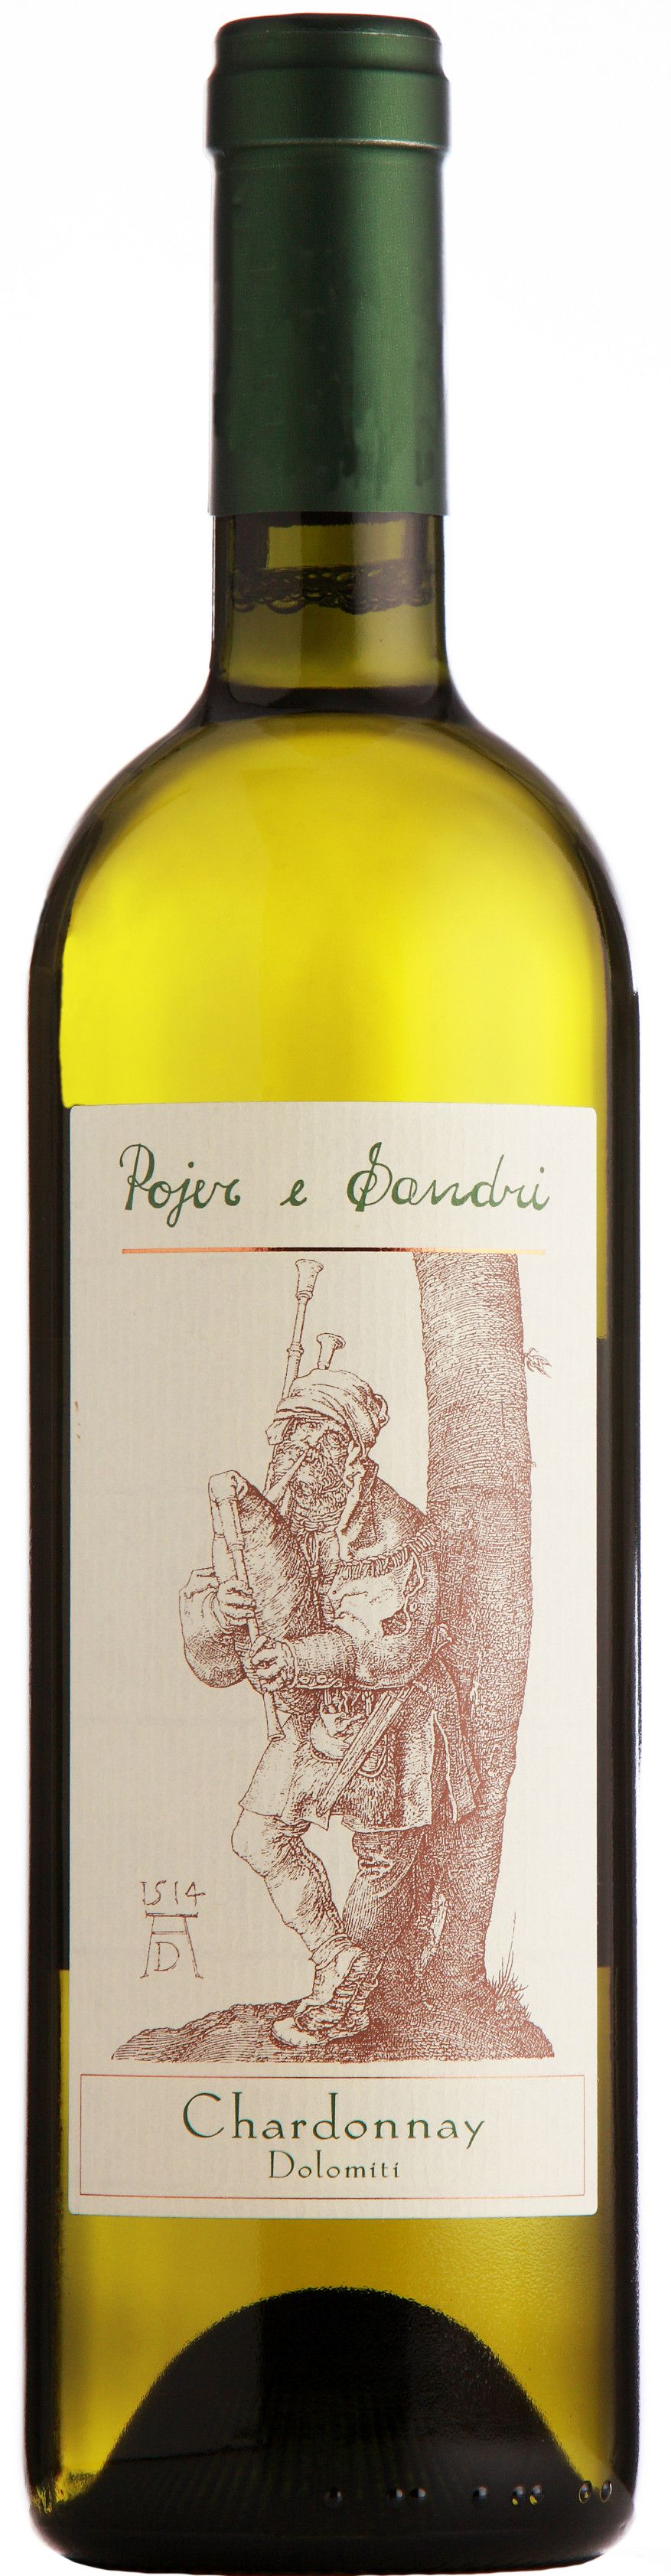 Pojer & Sandri, Chardonnay, 2015